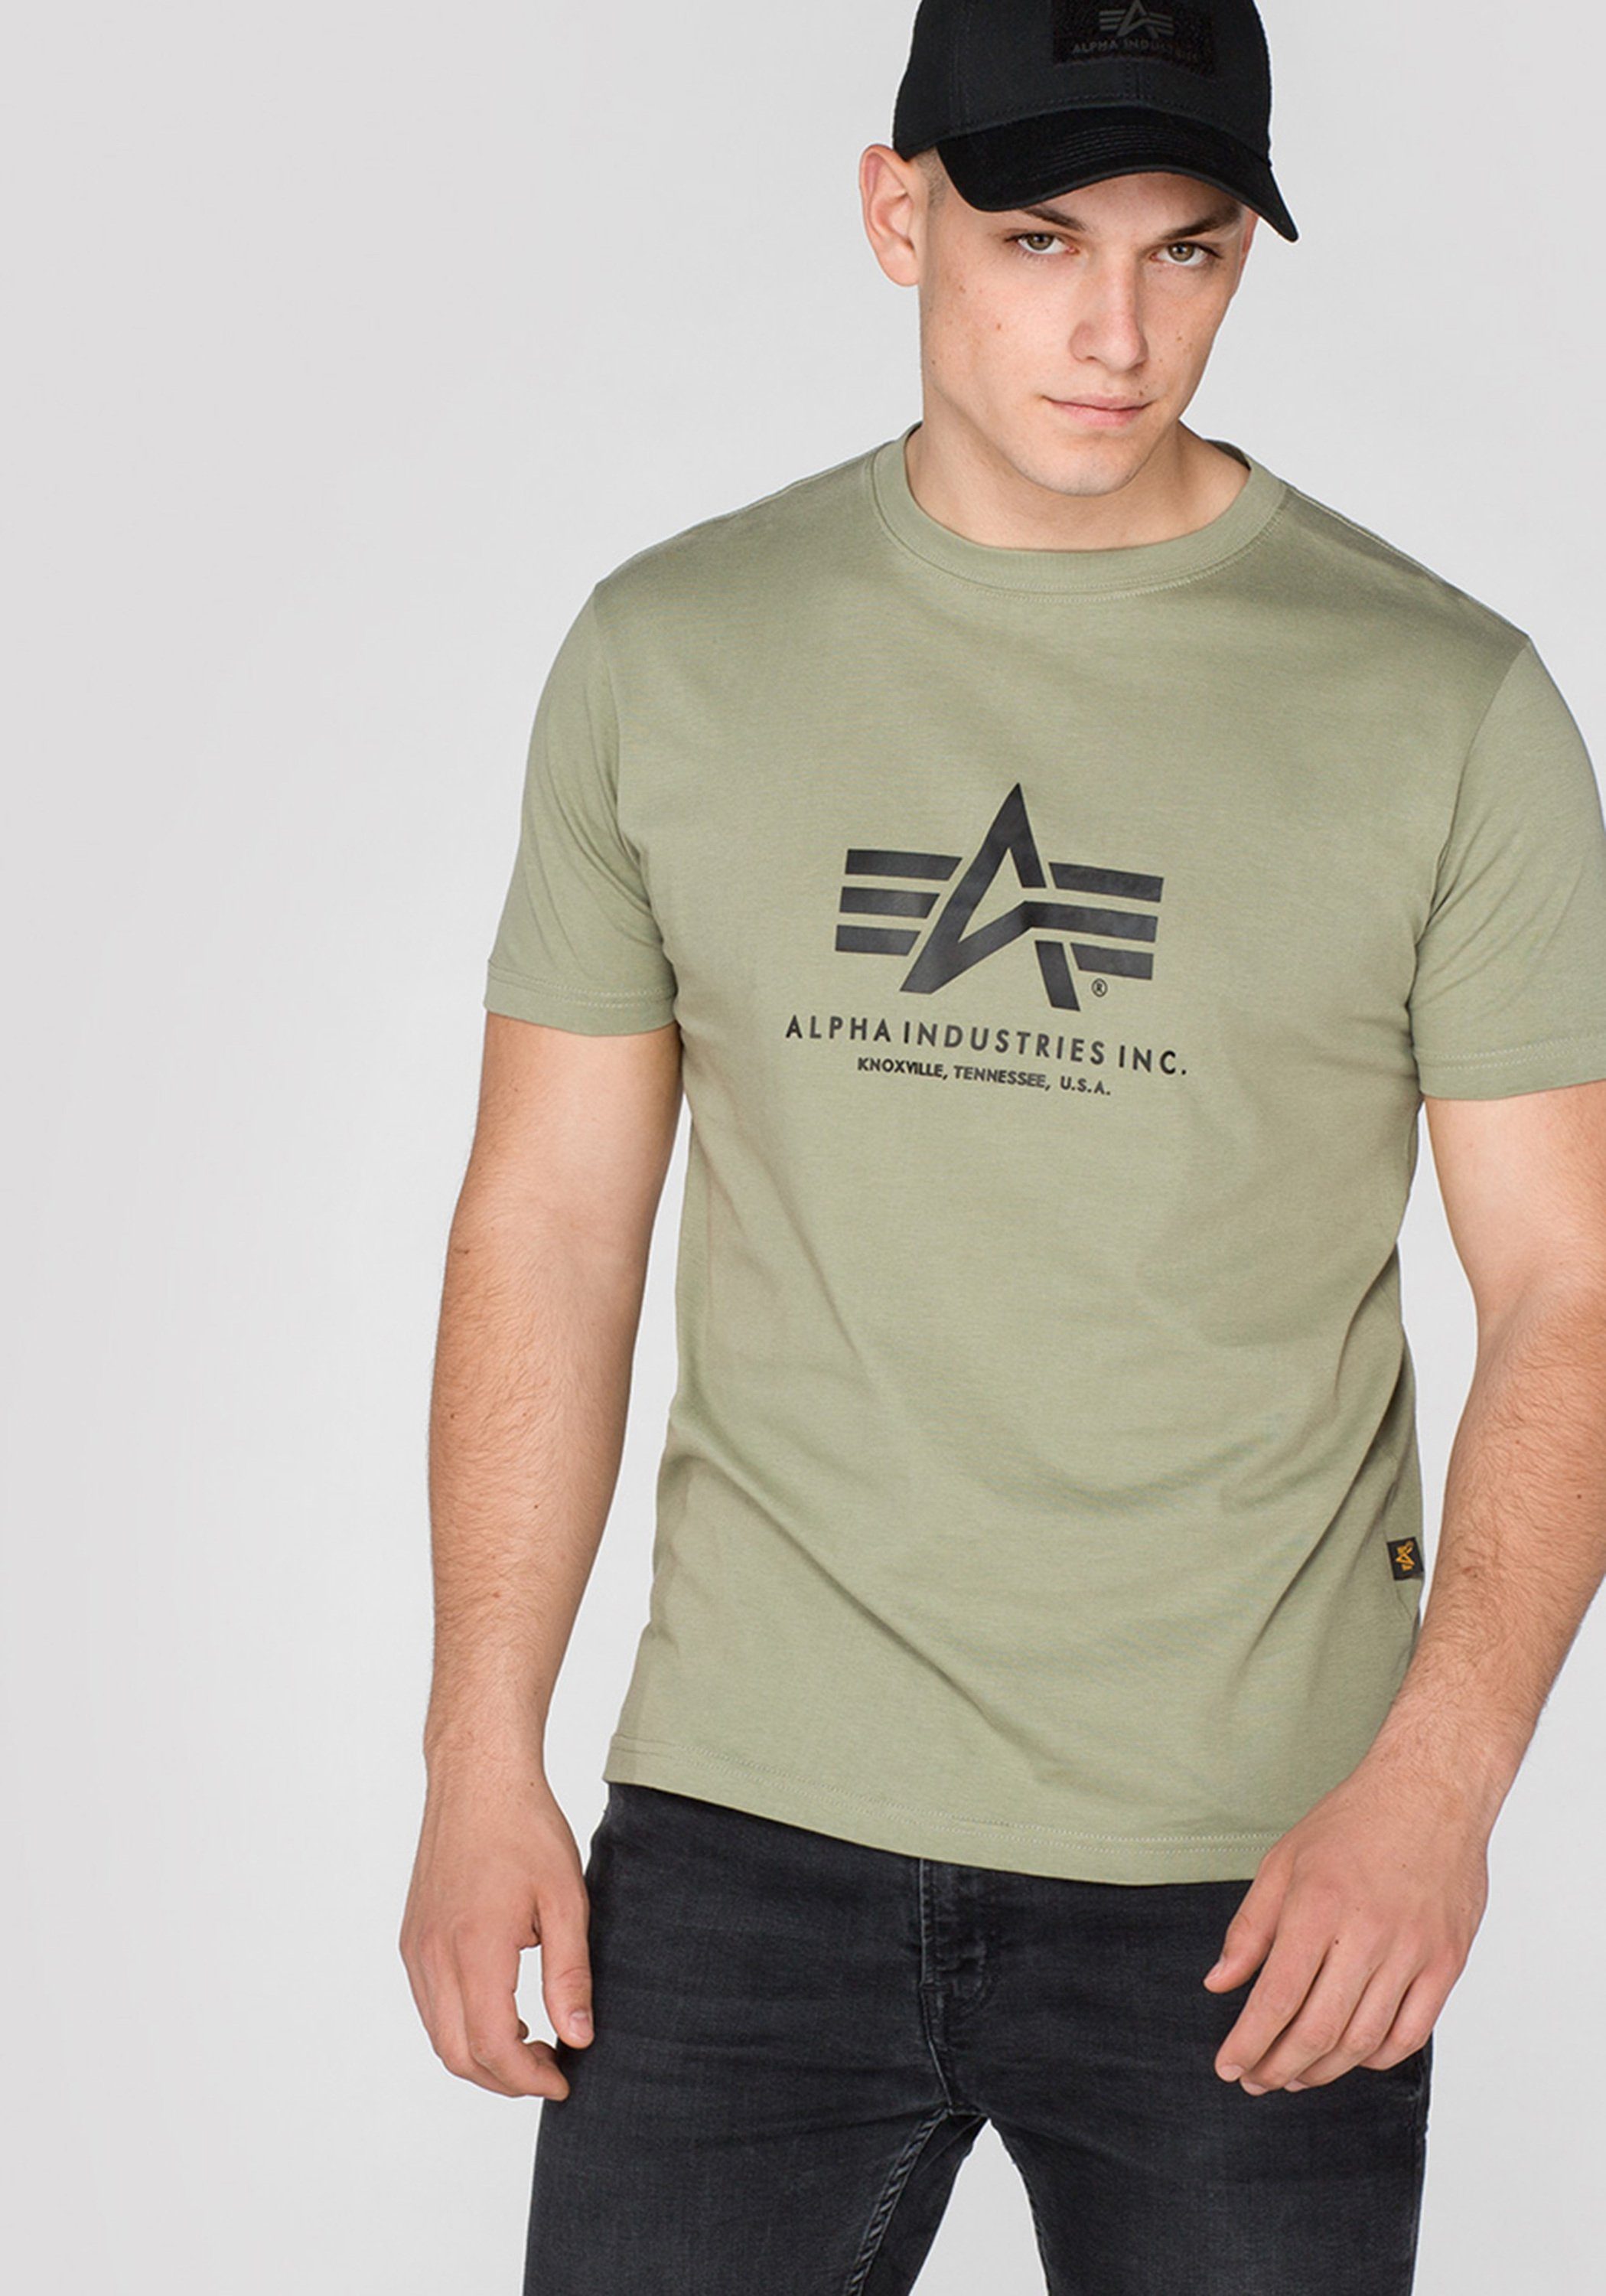 Alpha Industries T-Shirt Basic olive - T-Shirt Men Alpha Industries T-Shirts